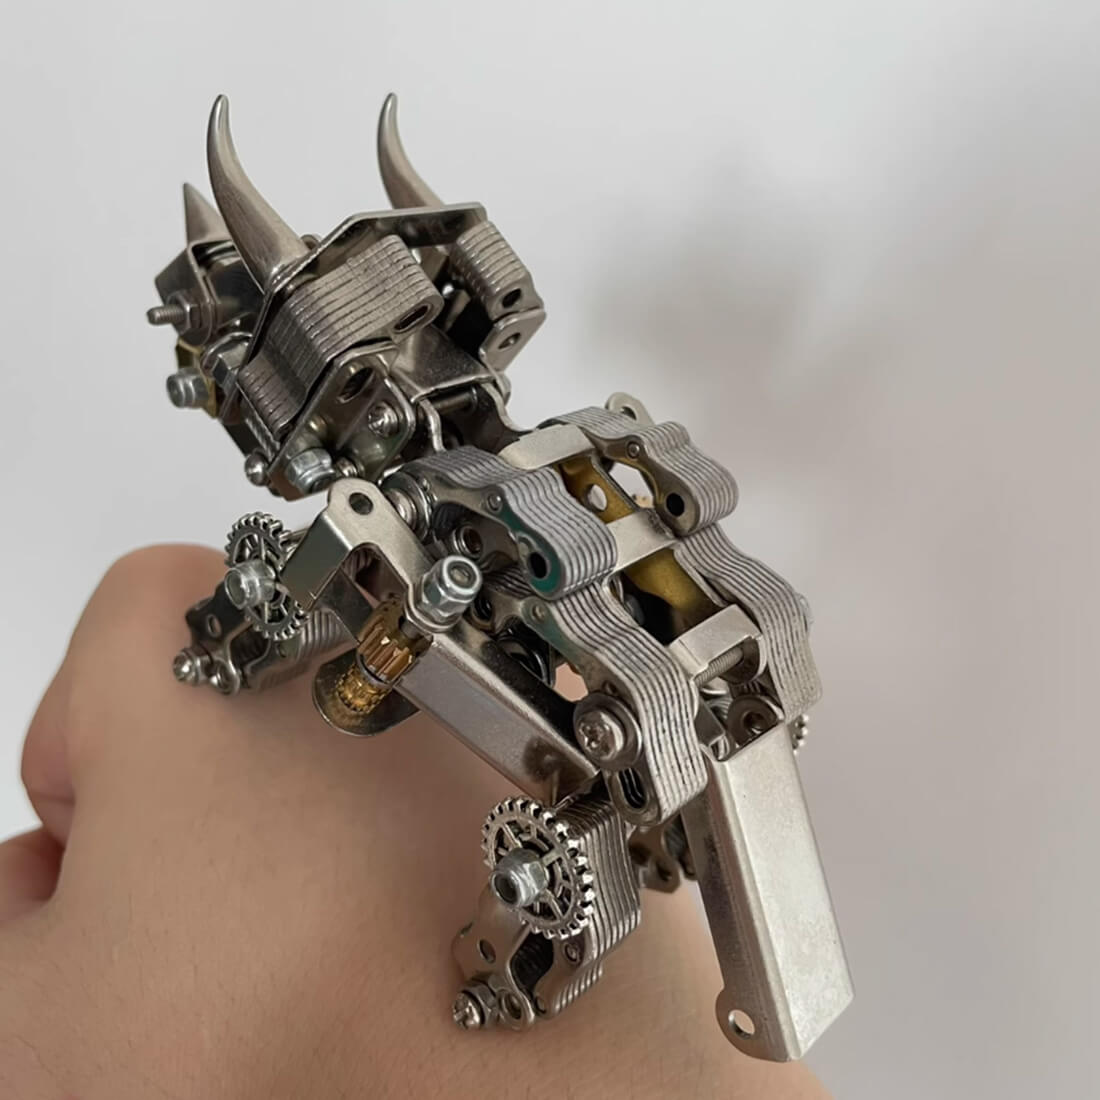 Small Triceratops 3D DIY Metal Model Kits